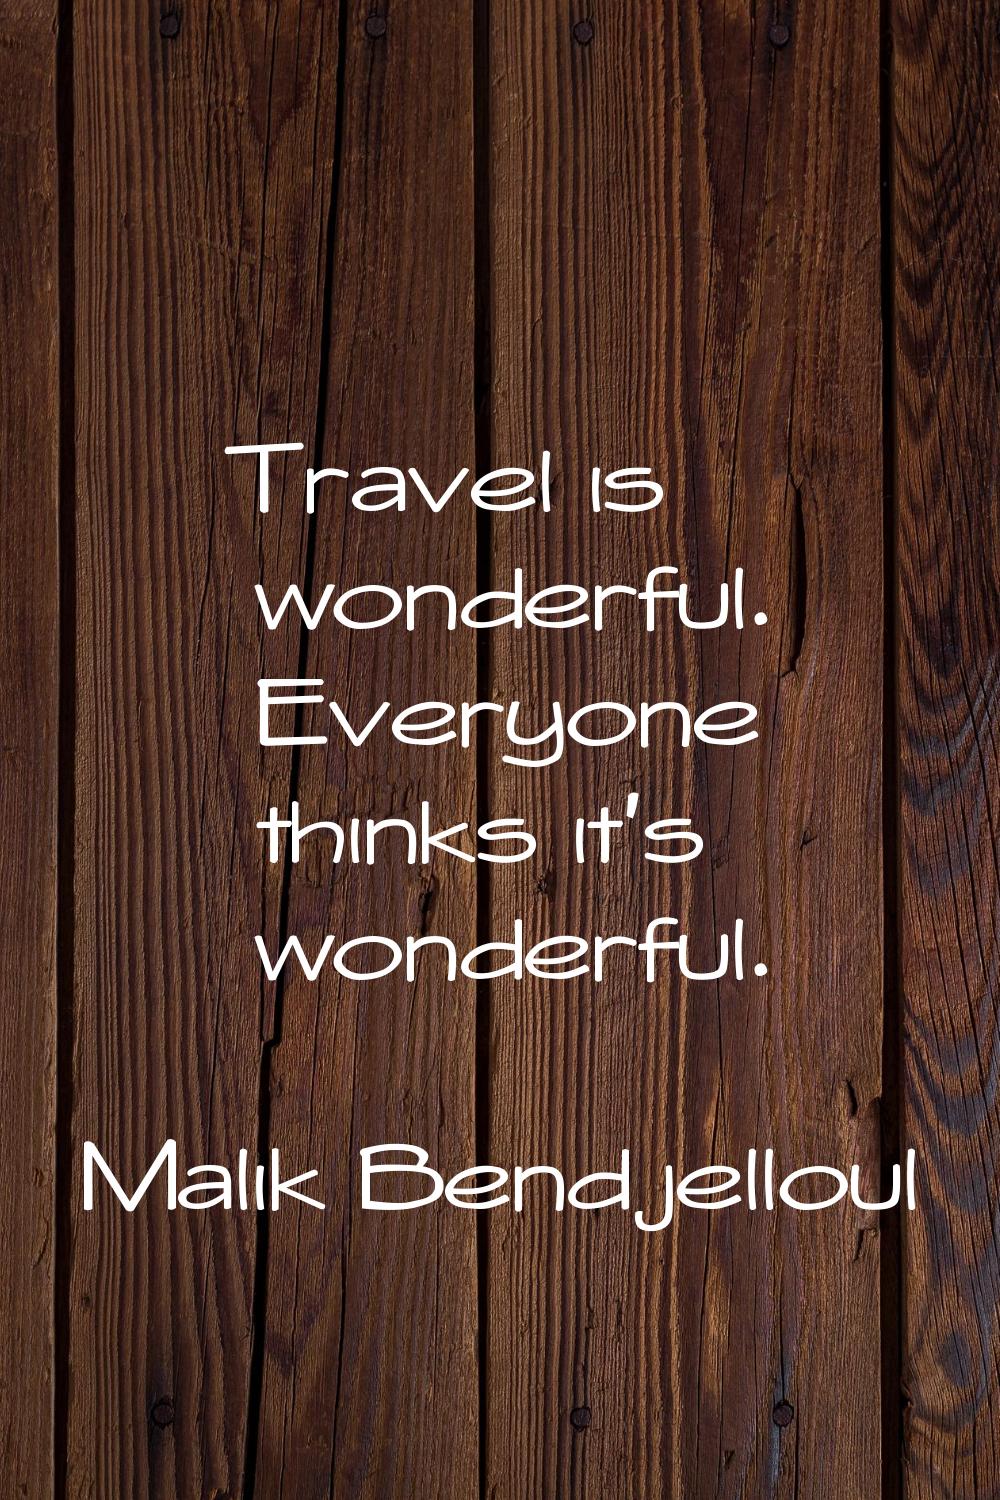 Travel is wonderful. Everyone thinks it's wonderful.